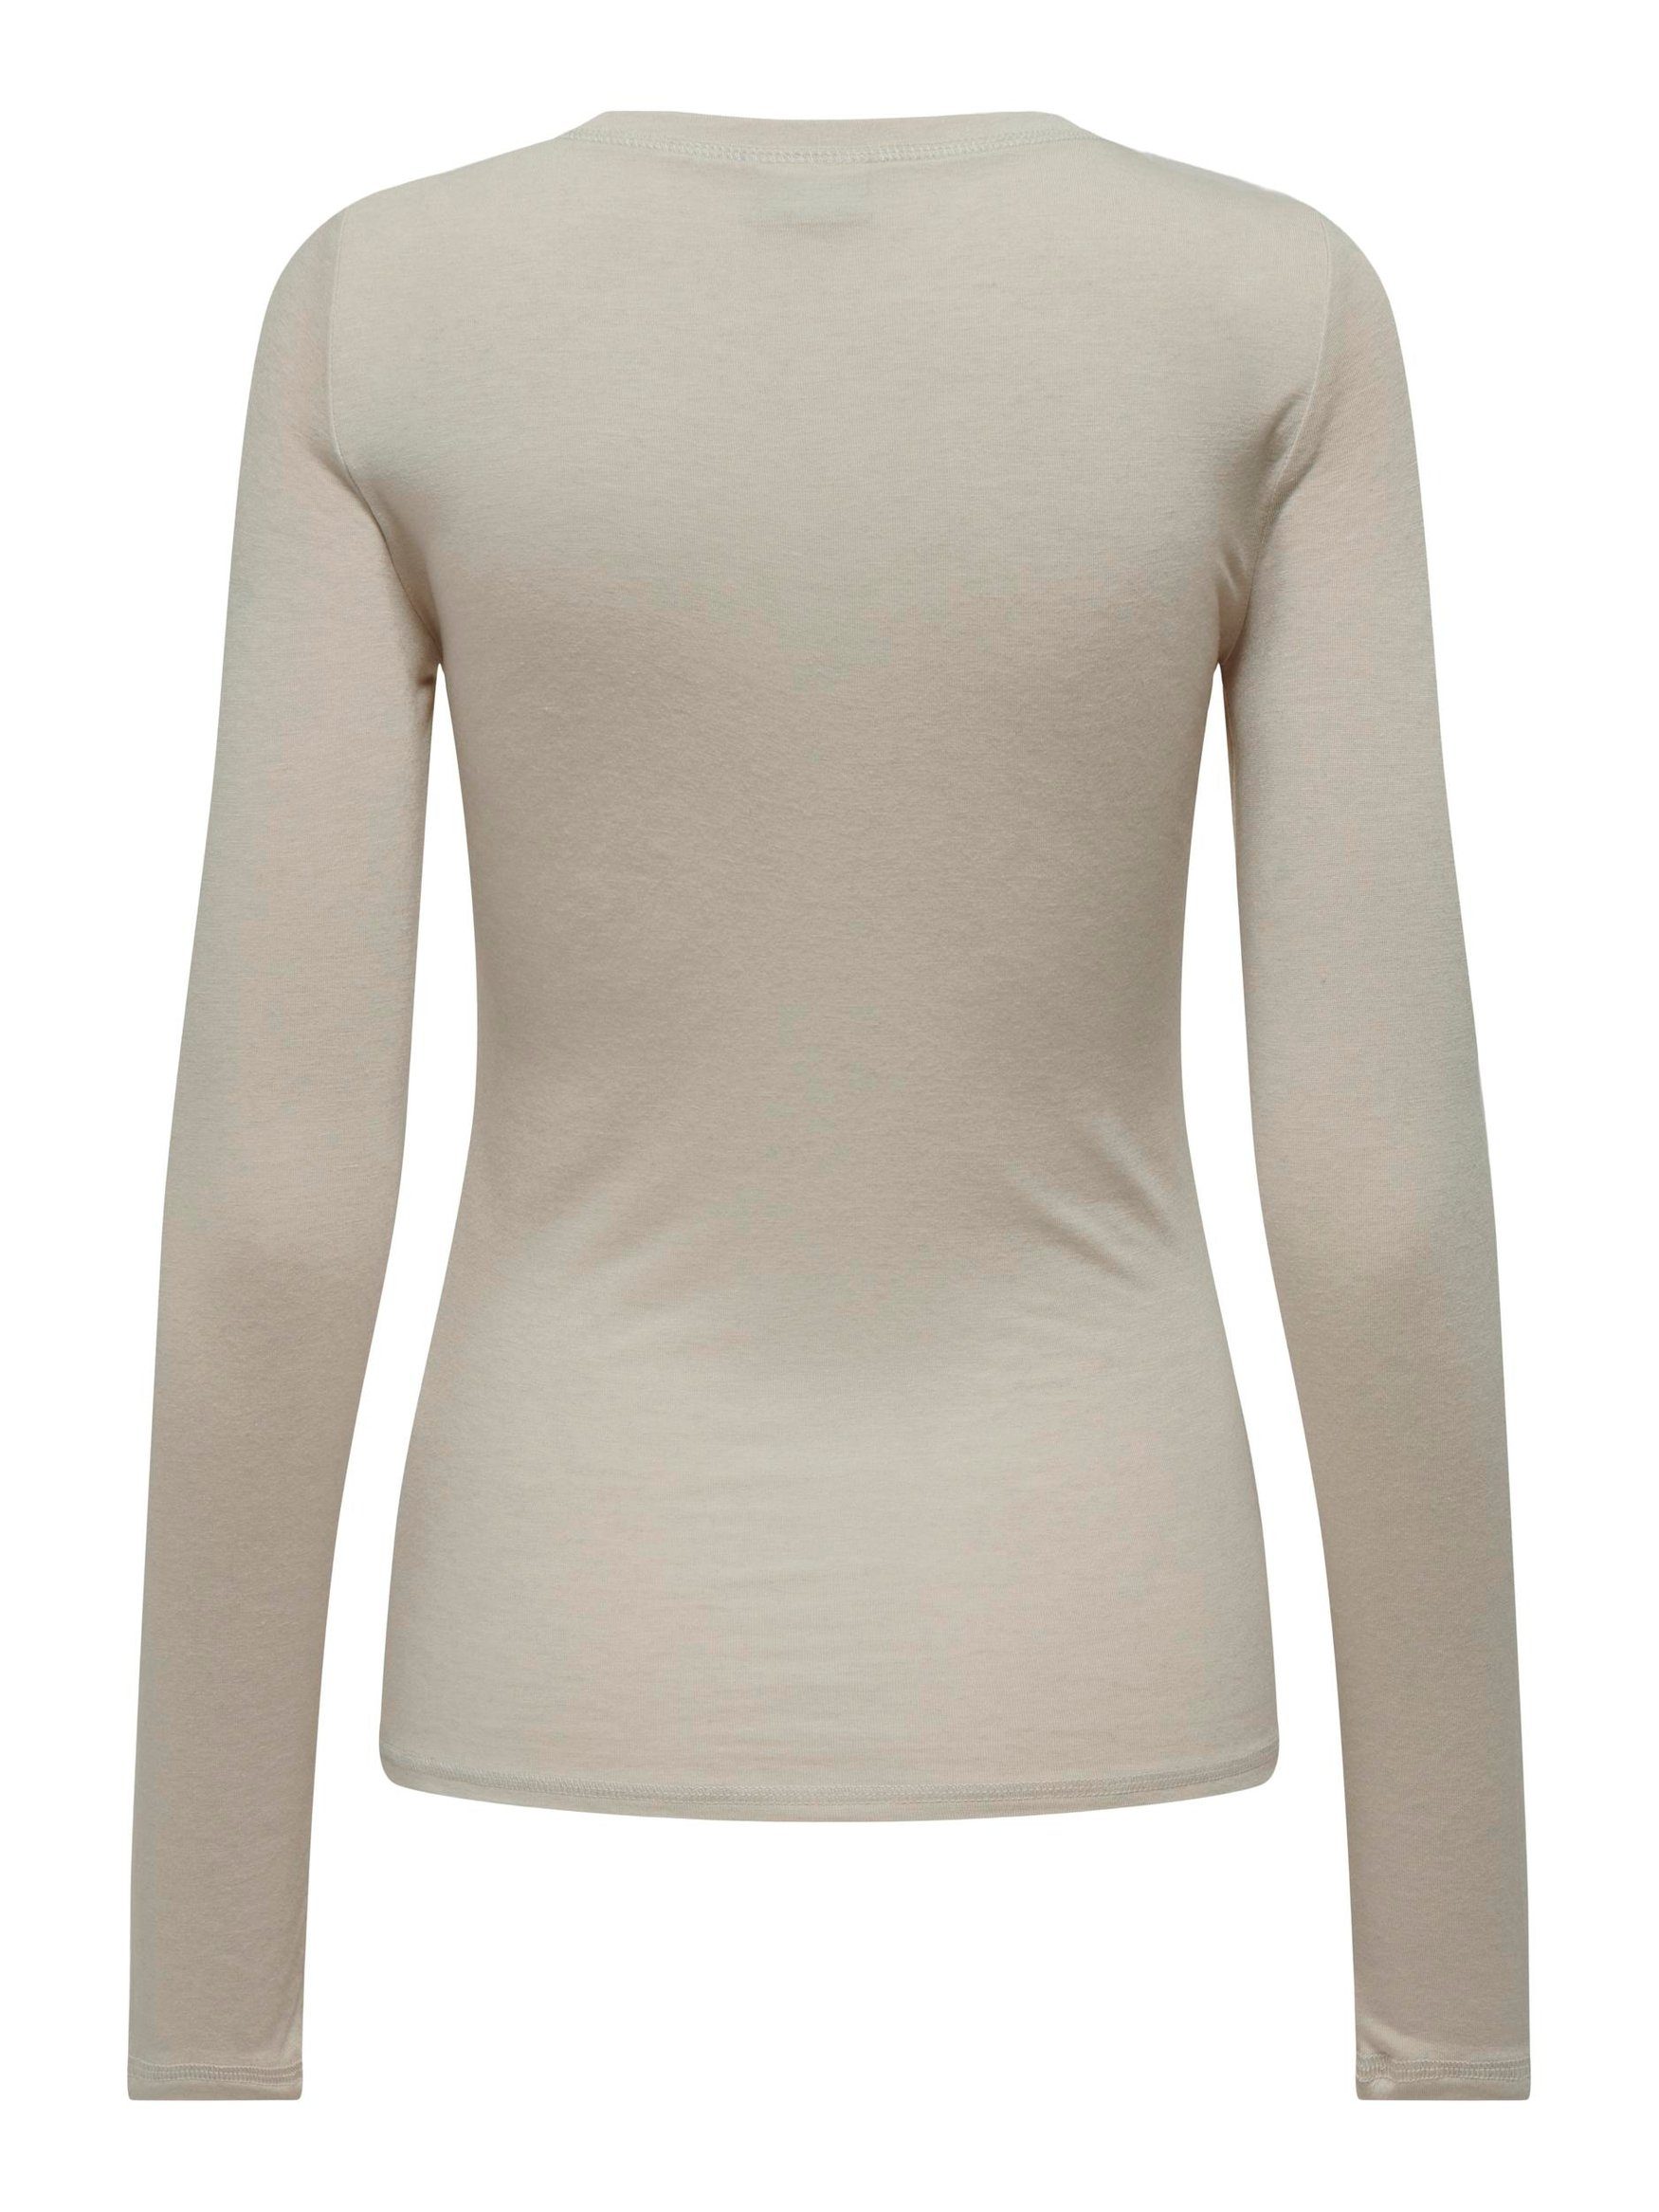 JDYSUMA 6403 Shirt YONG Grau-2 Pullover Dünner de Langarm in T-Shirt Basic JACQUELINE